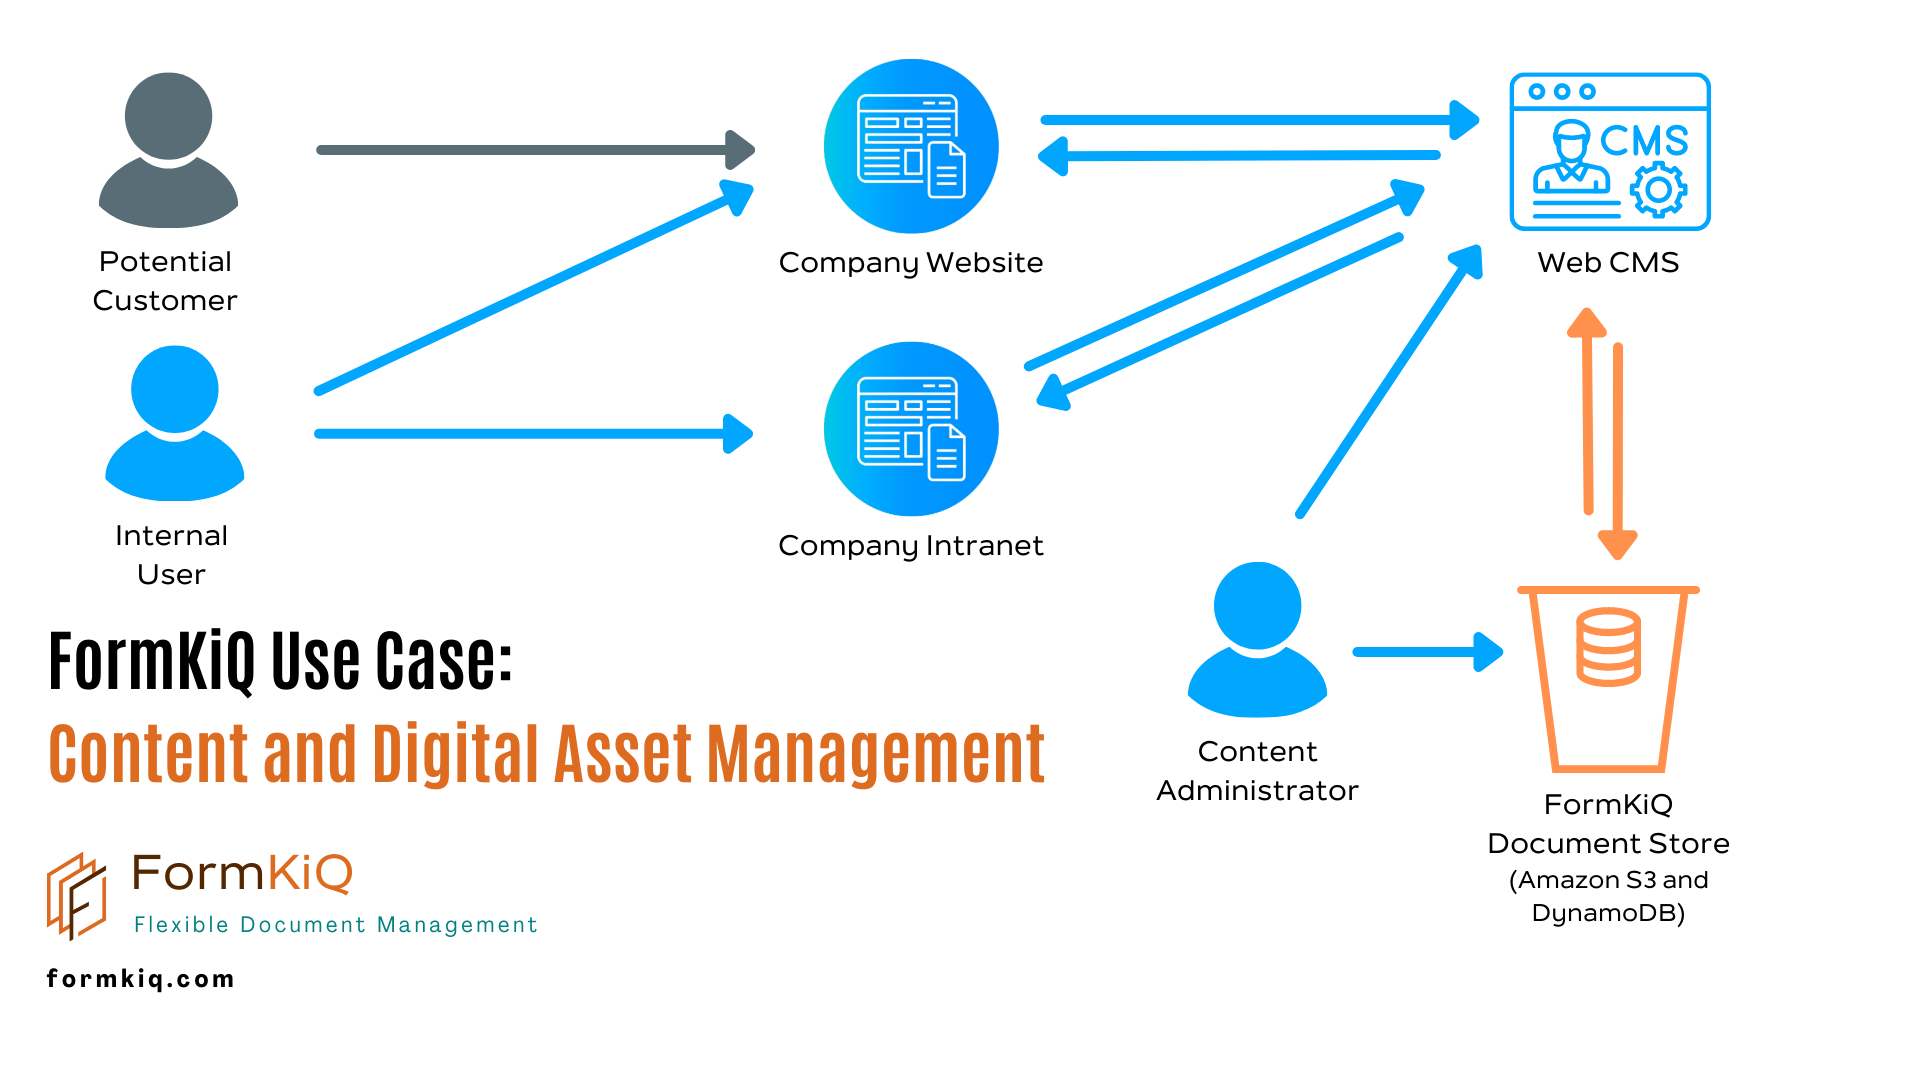 FormKiQ Use Case: Content and Digital Asset Management